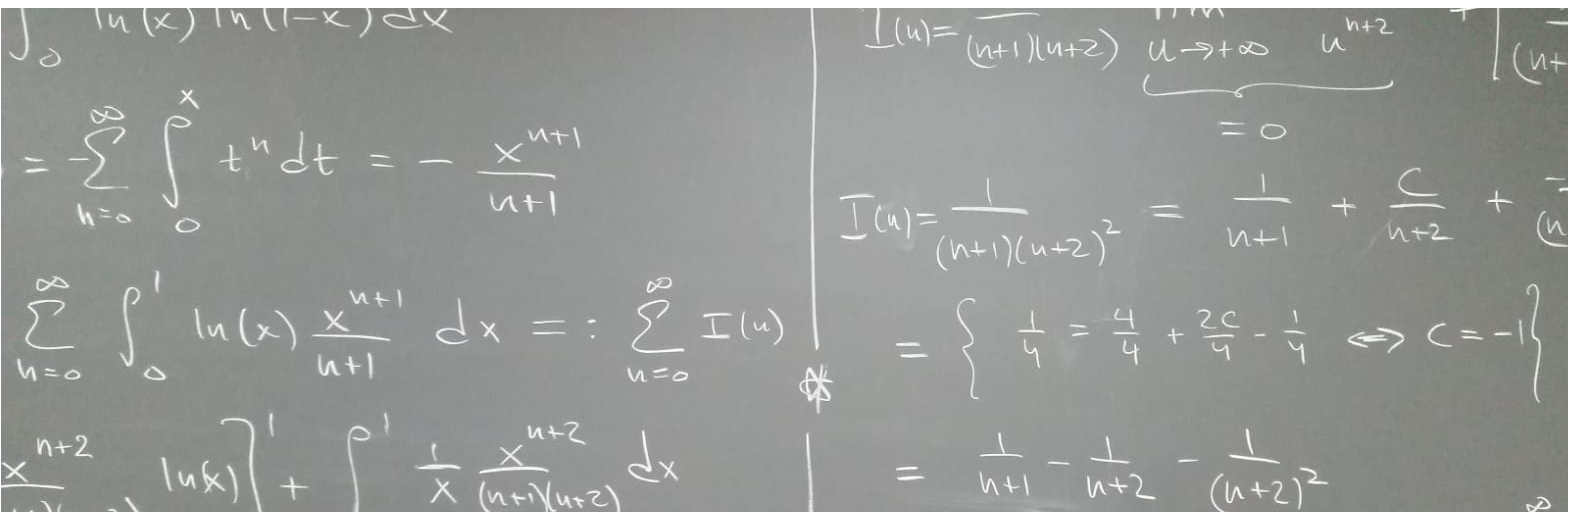 Blackboard with formula